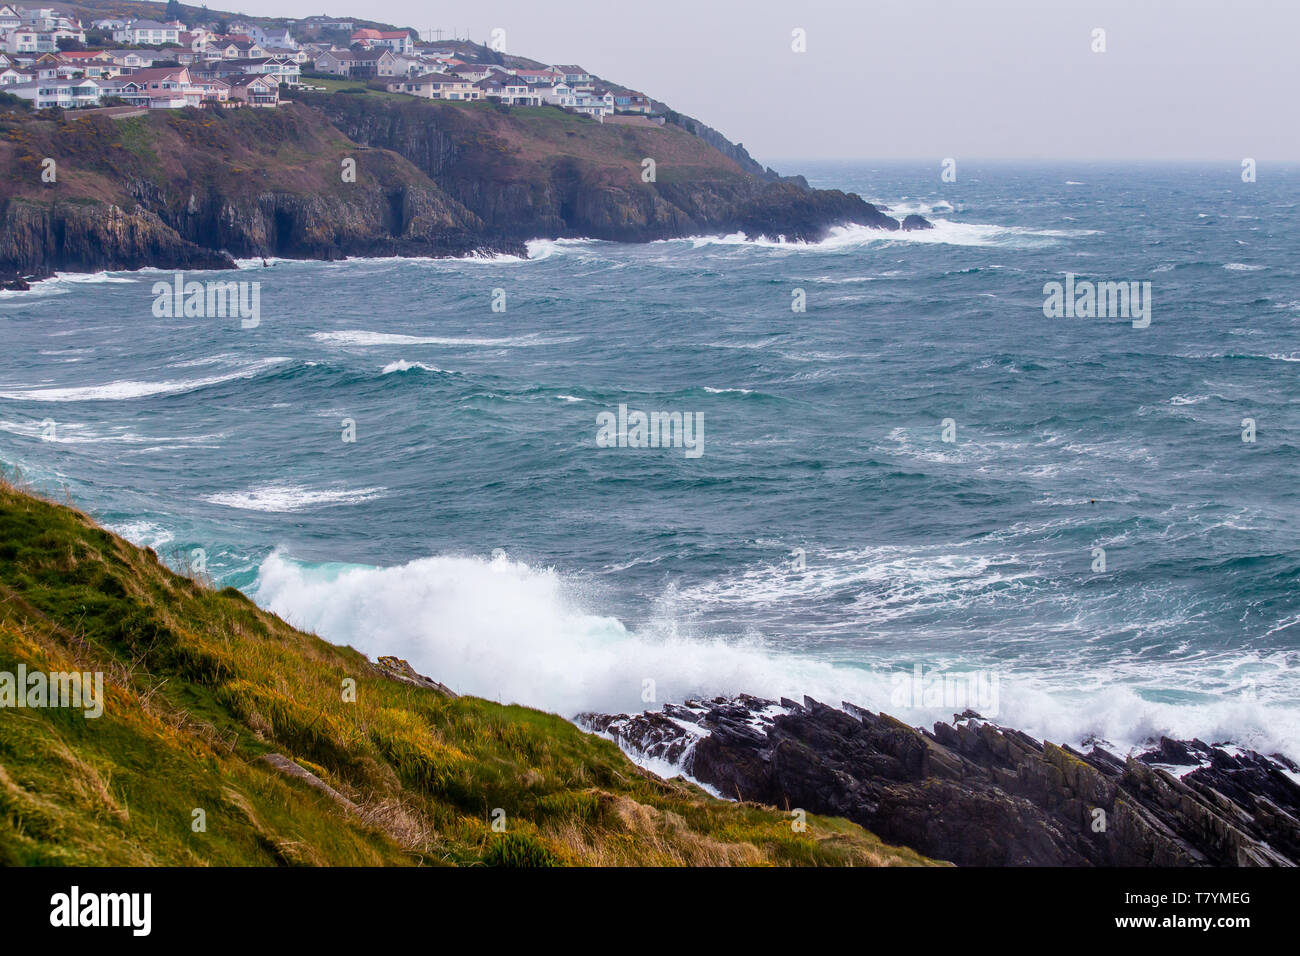 Waves crashing ashore during a storm at Onchan Head near Douglas, Isle of Man Stock Photo